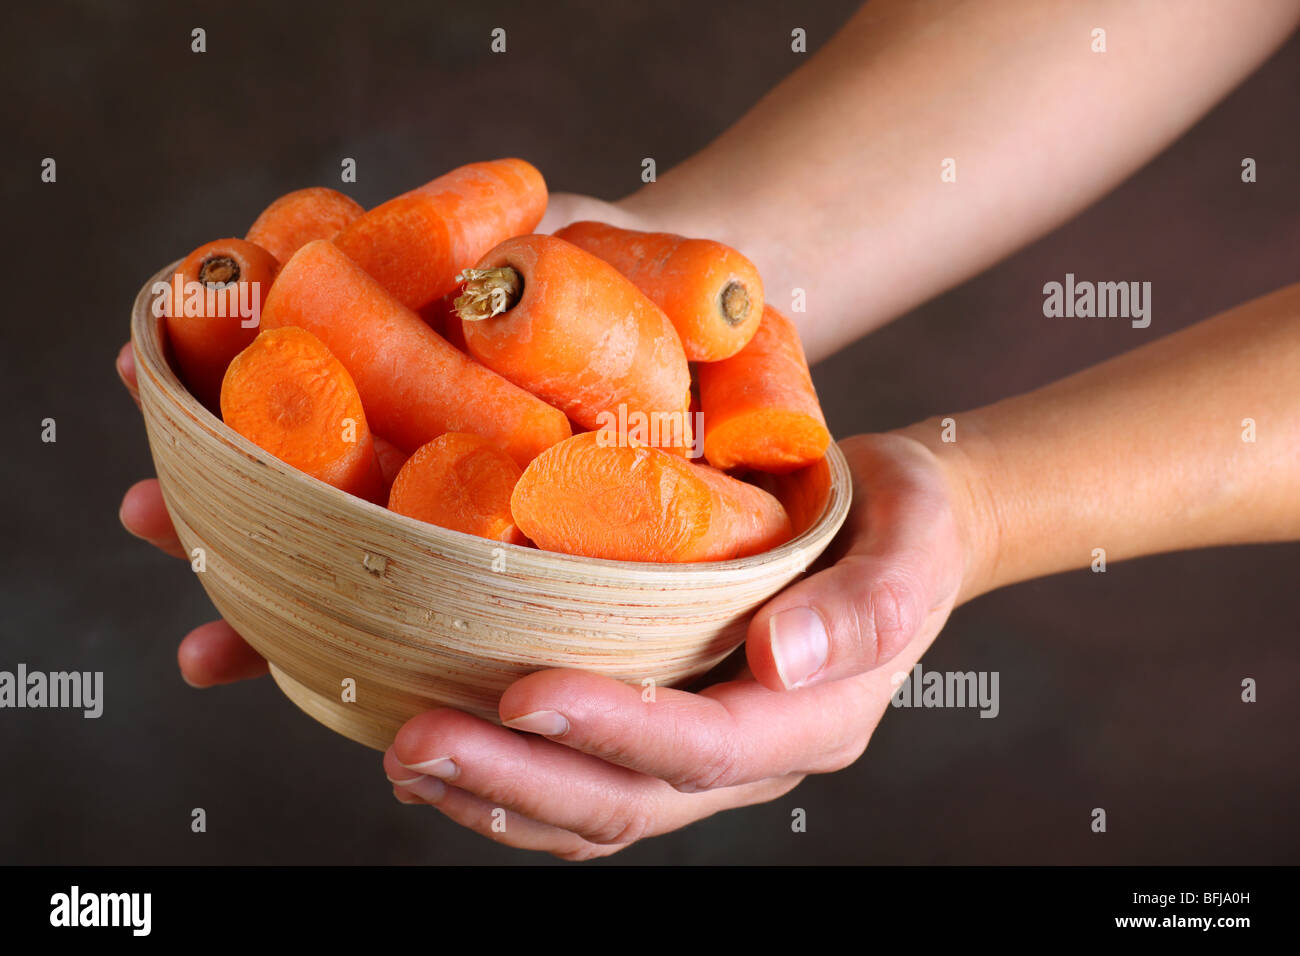 a bowl full of freshly prepared cut carrots Stock Photo